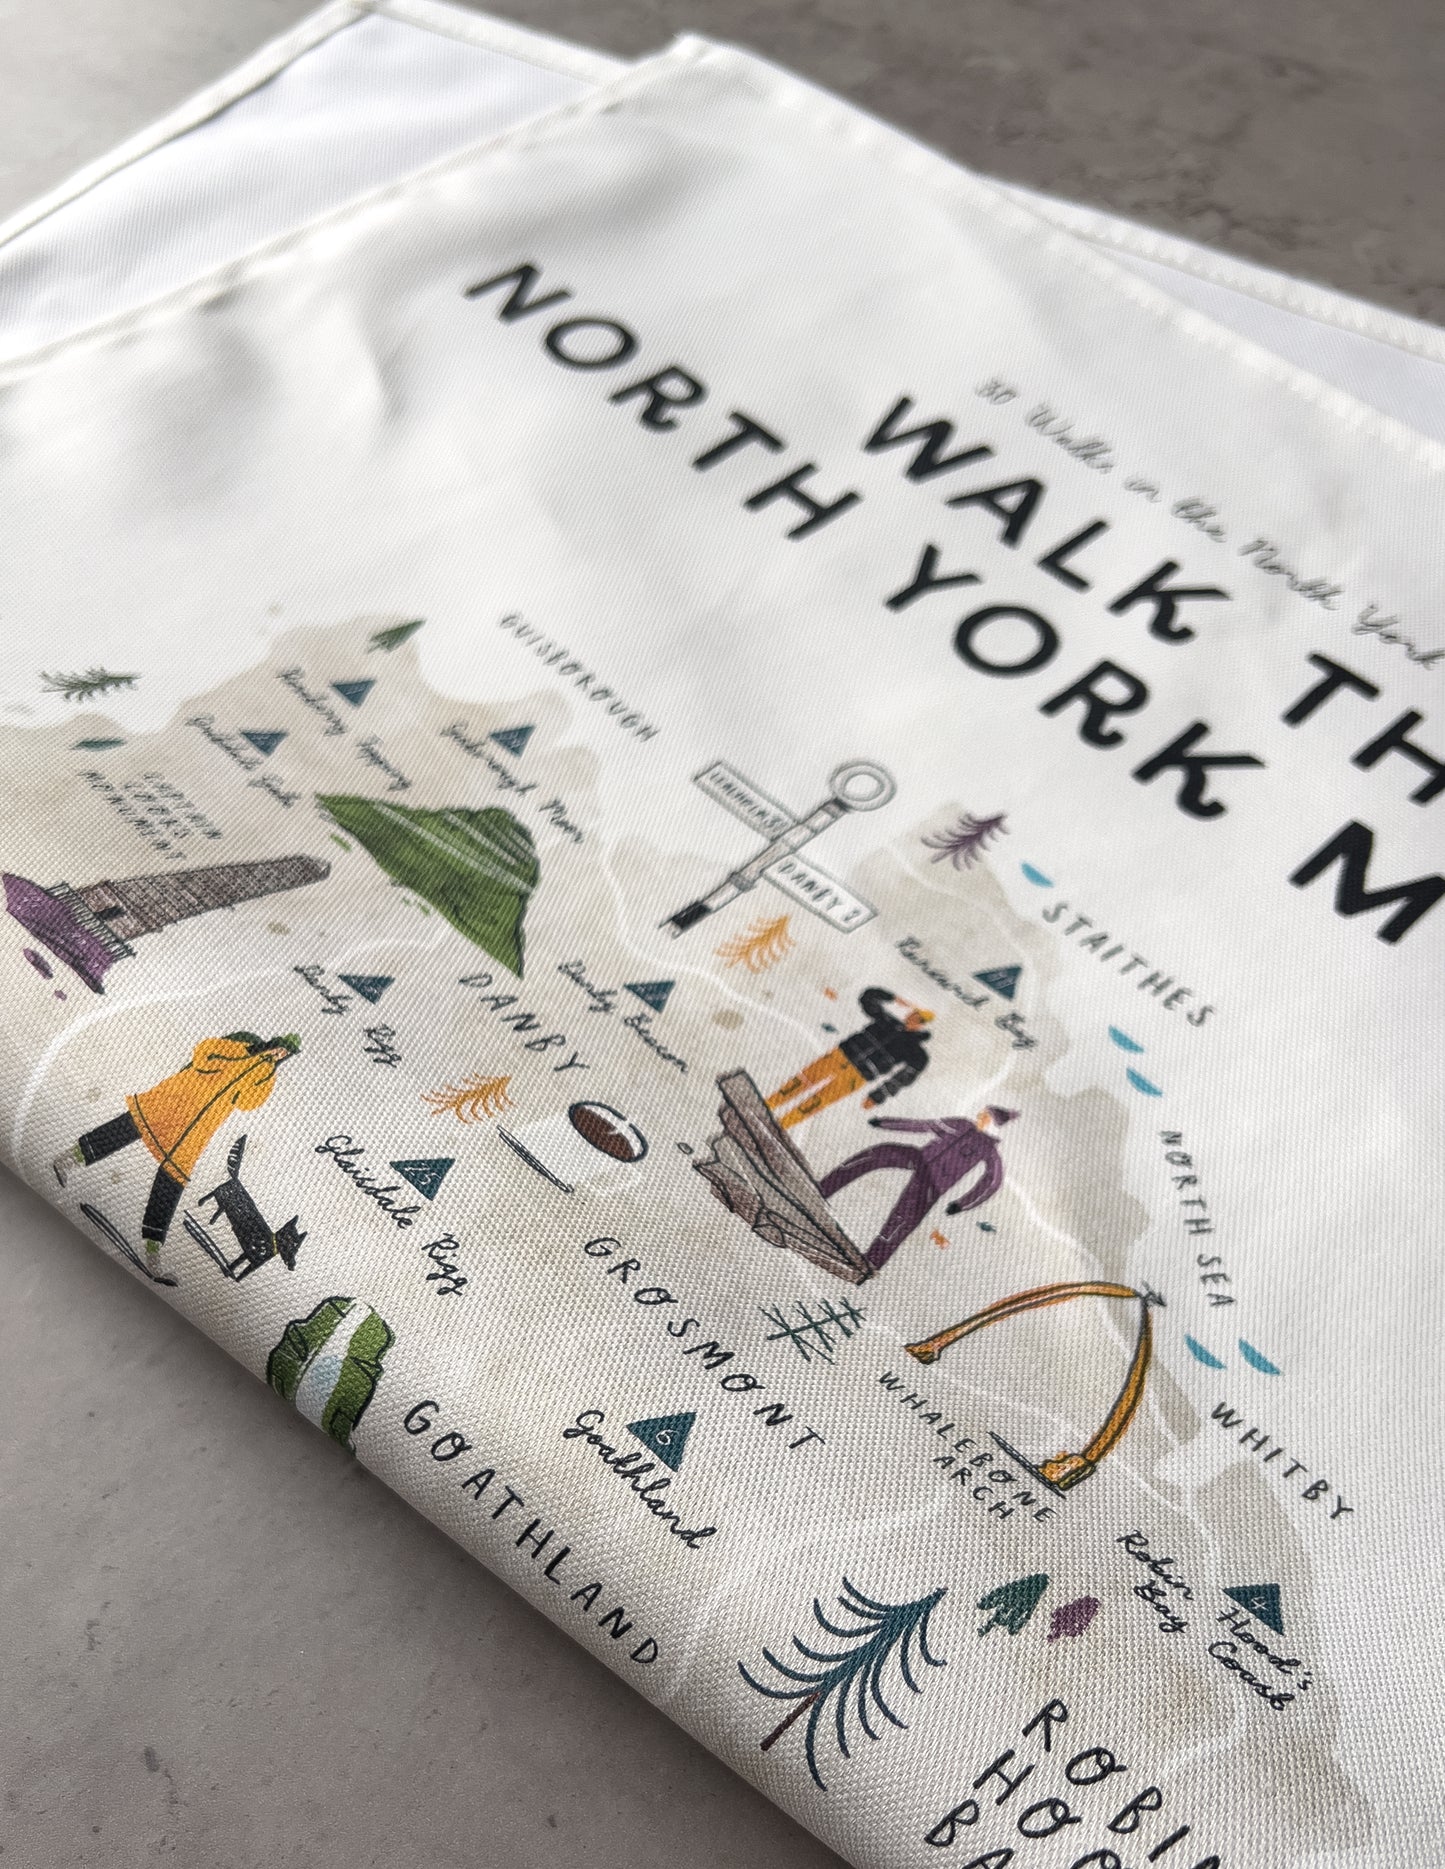 Walk the North York Moors Tea Towel